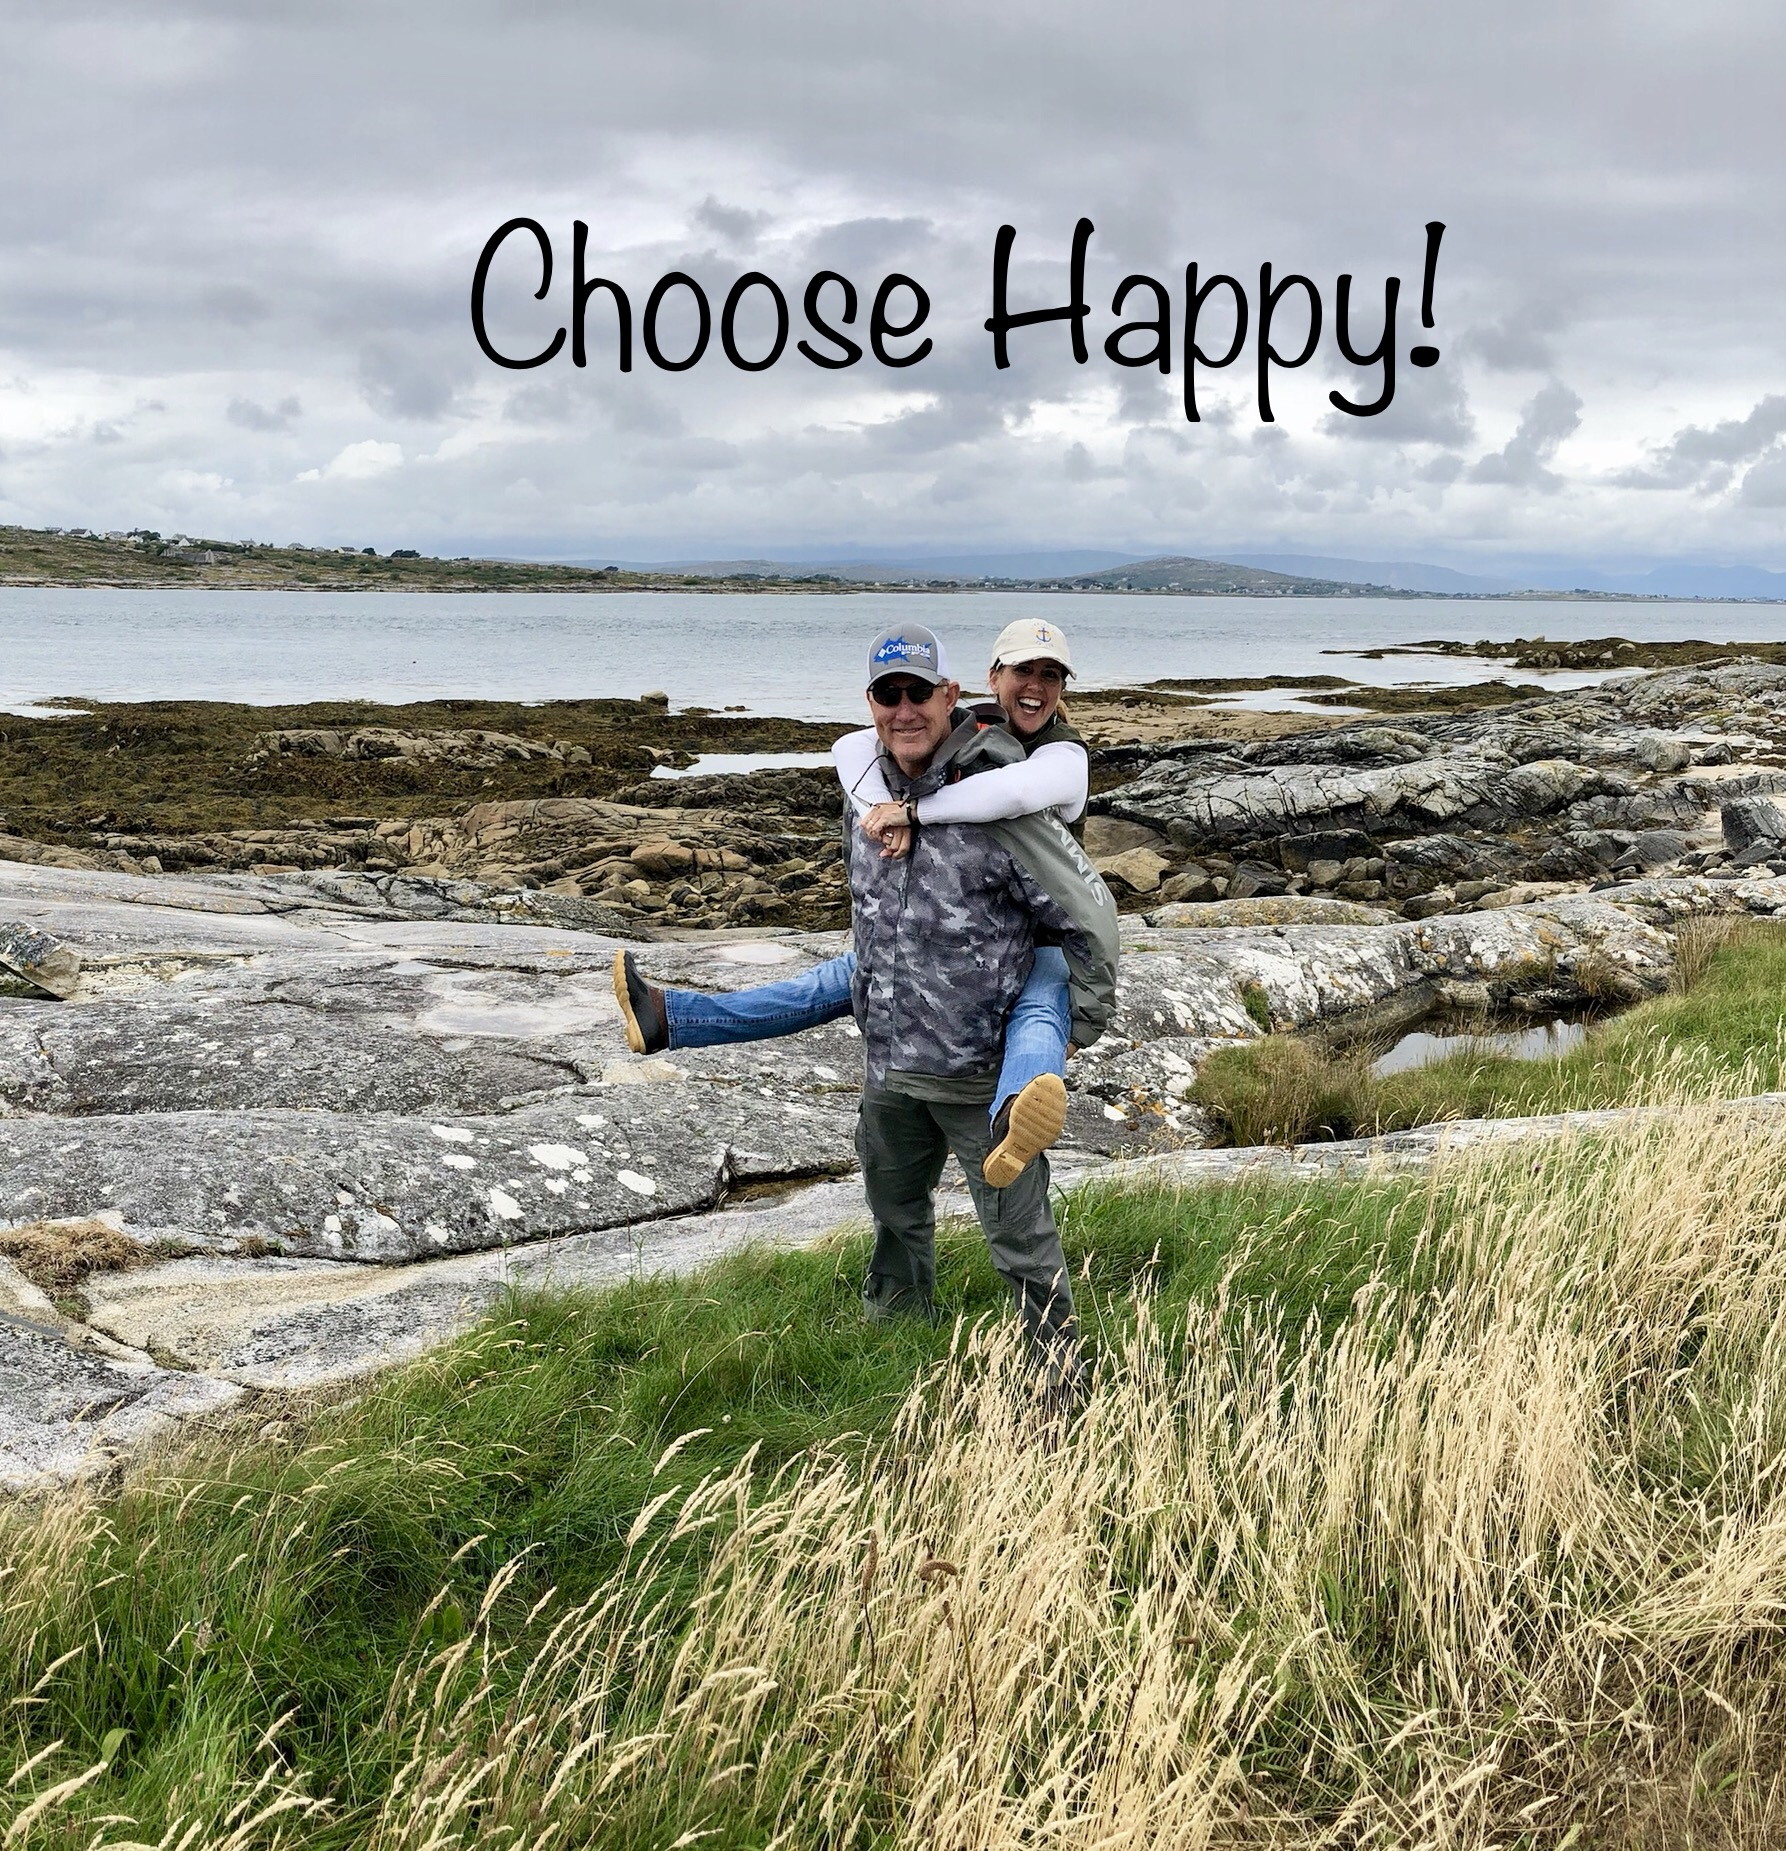 Choose Happy!